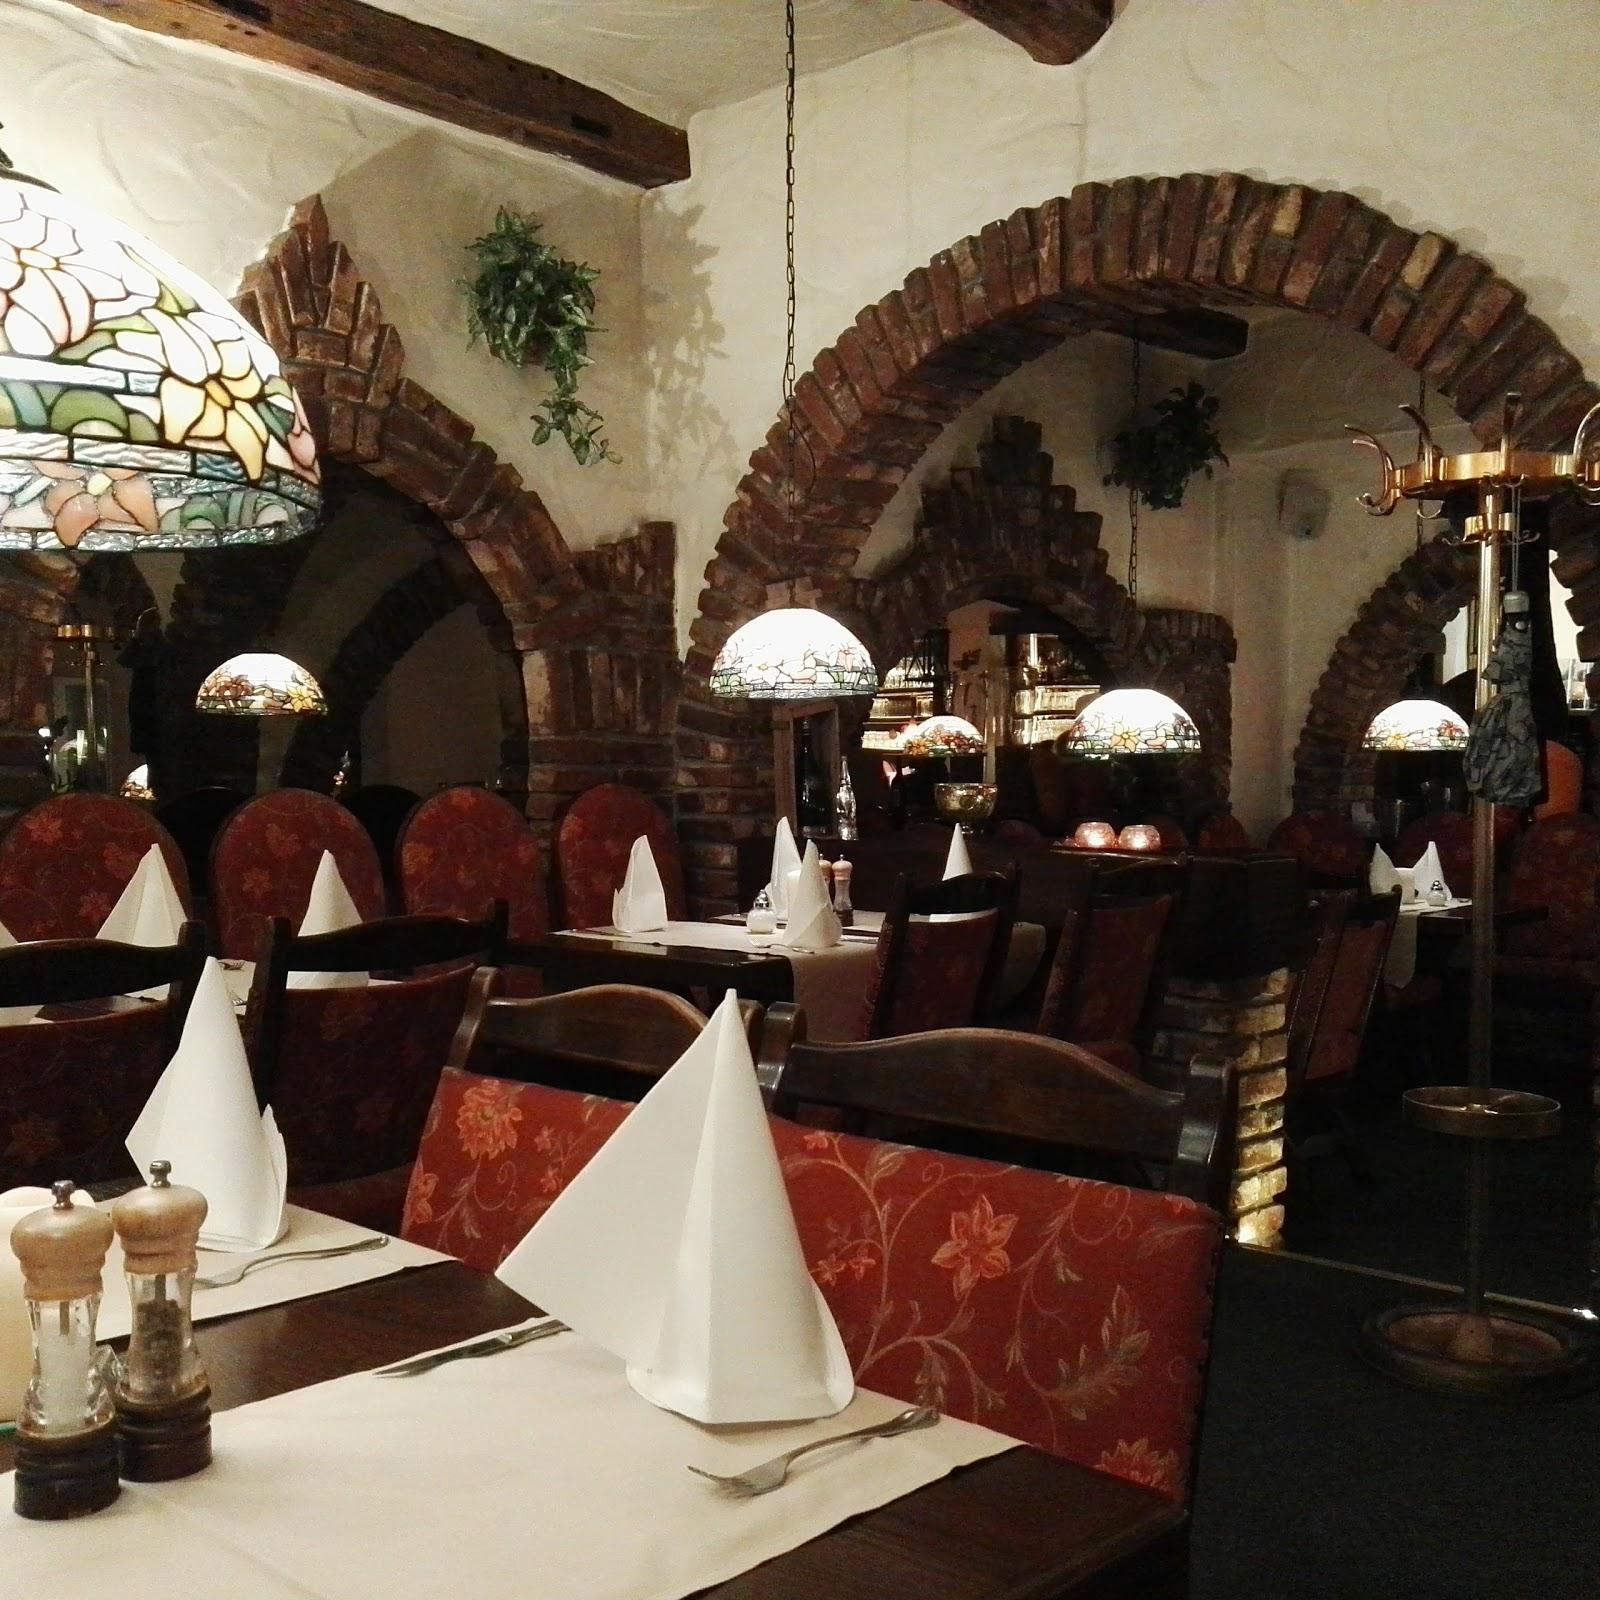 Restaurant "Restaurant Peperoni" in Siegburg